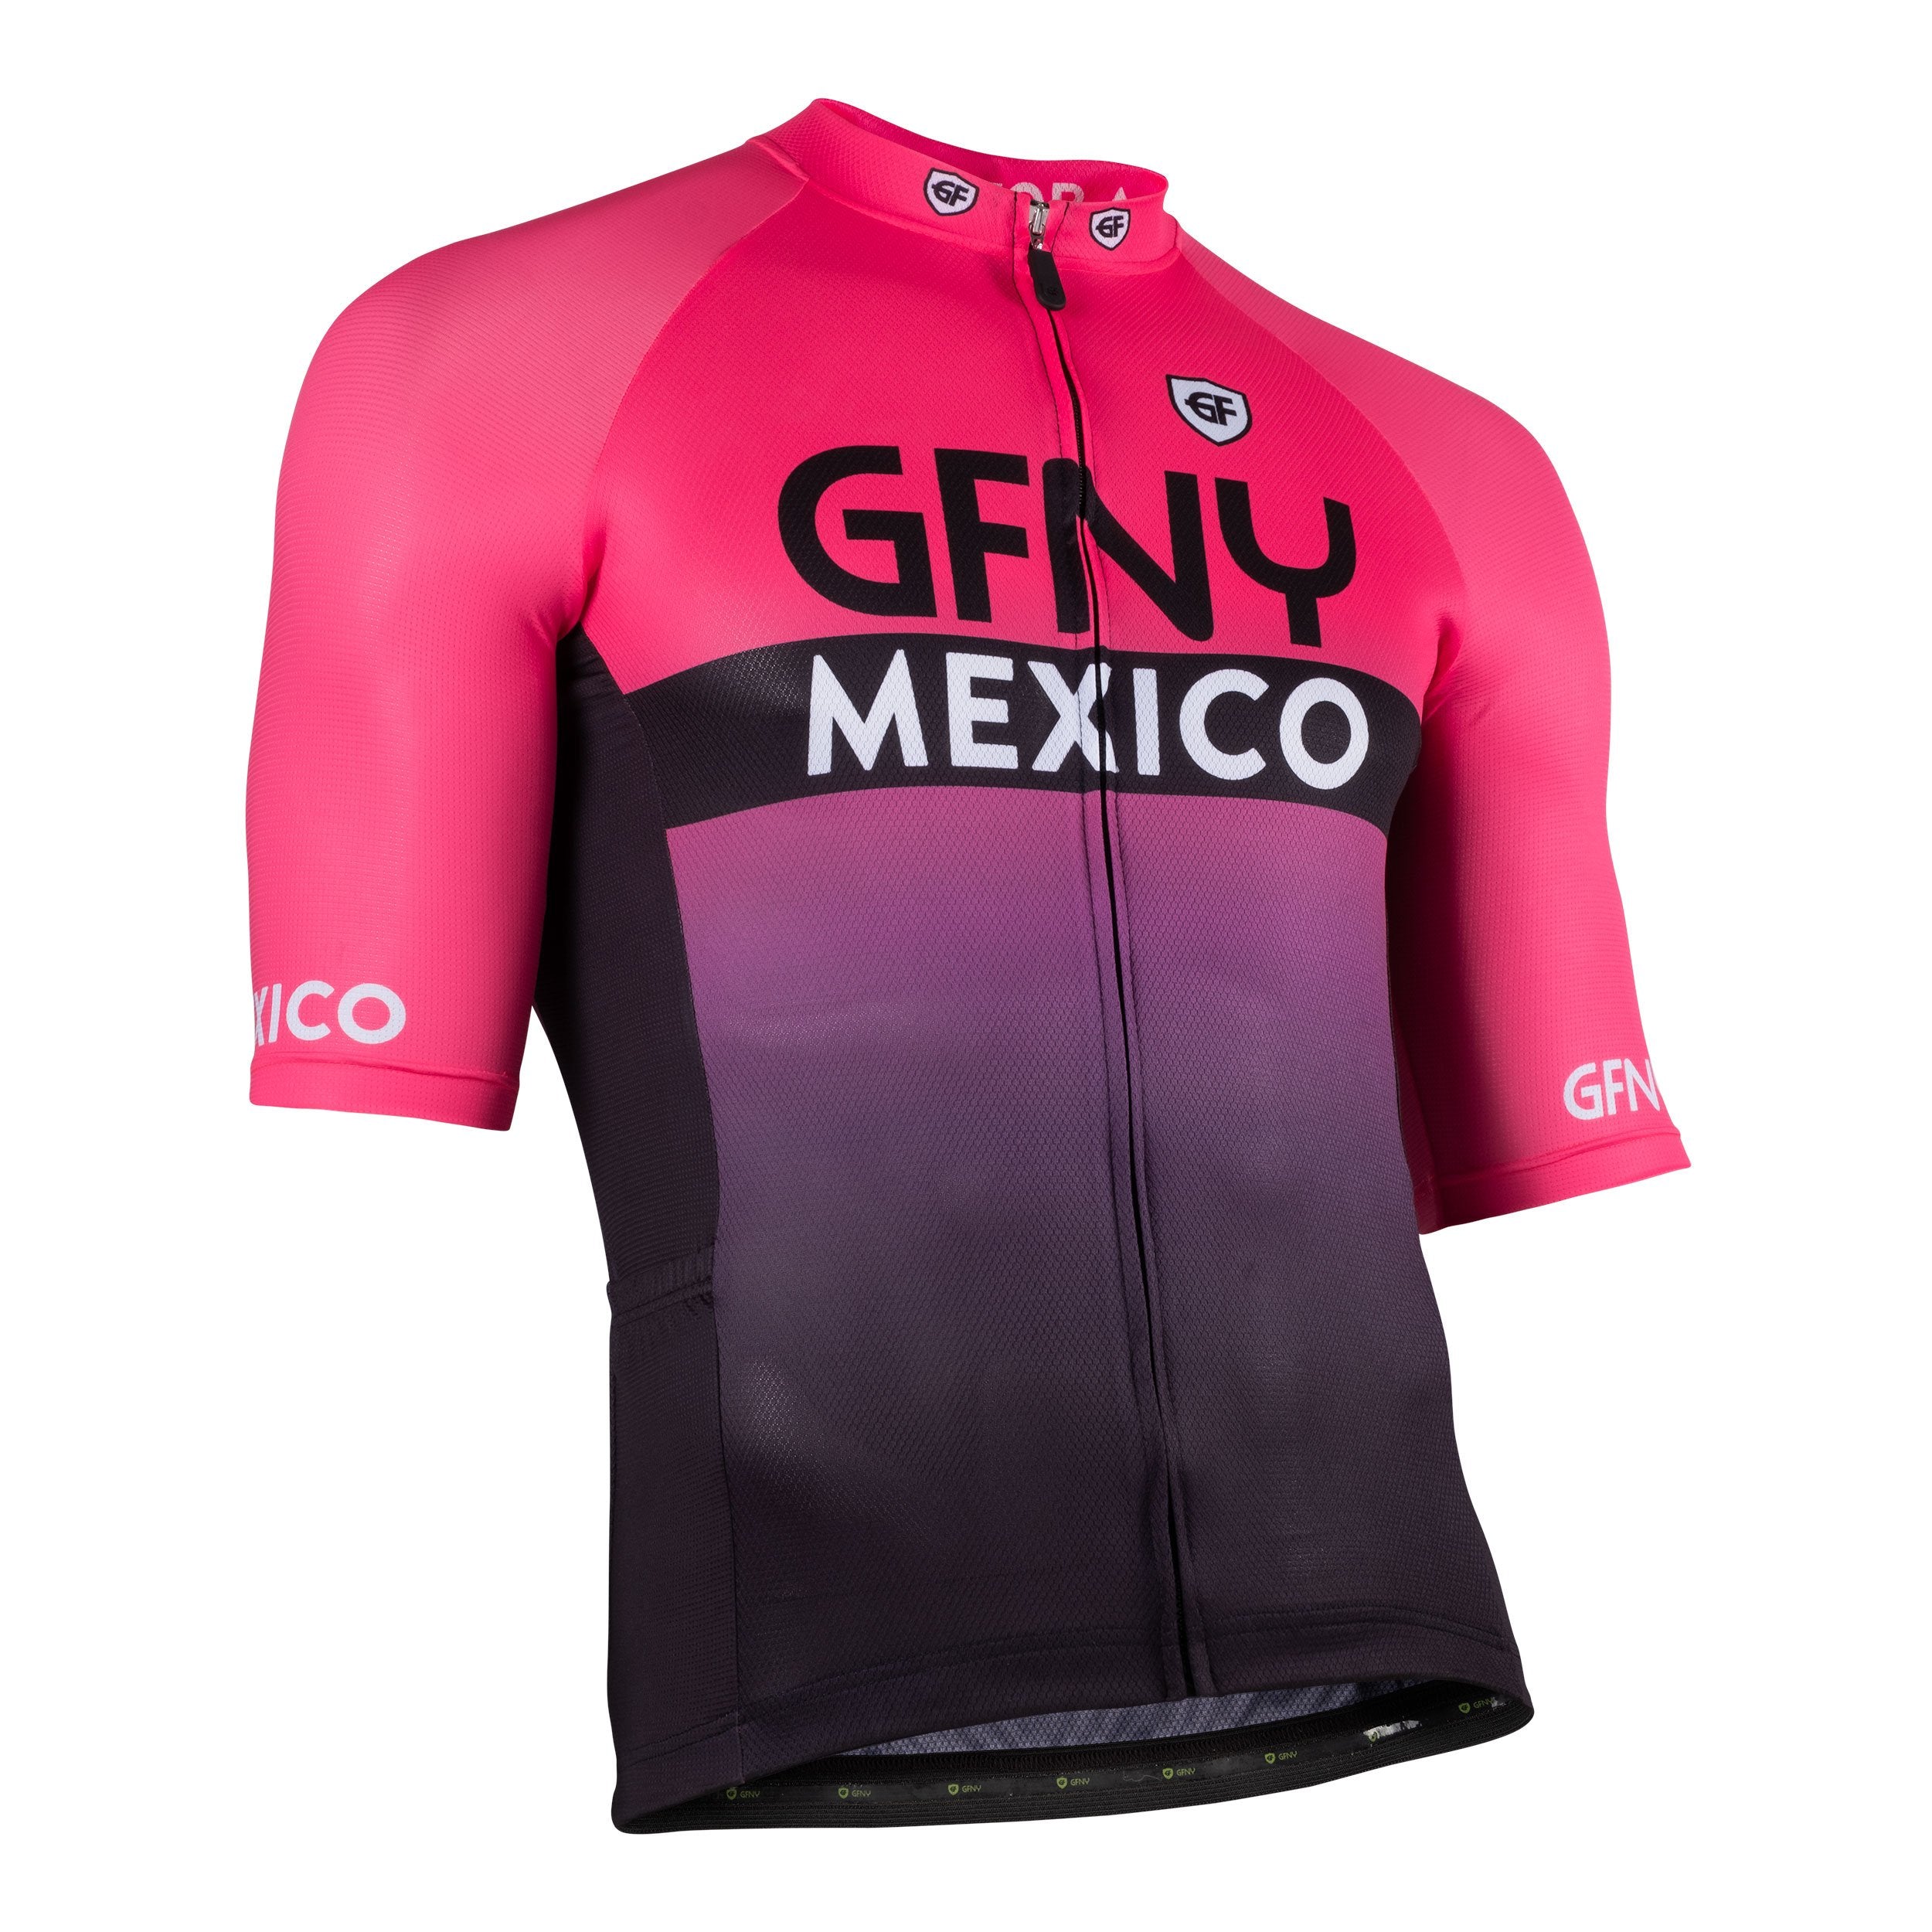 GFNY Mexico Limited Edition